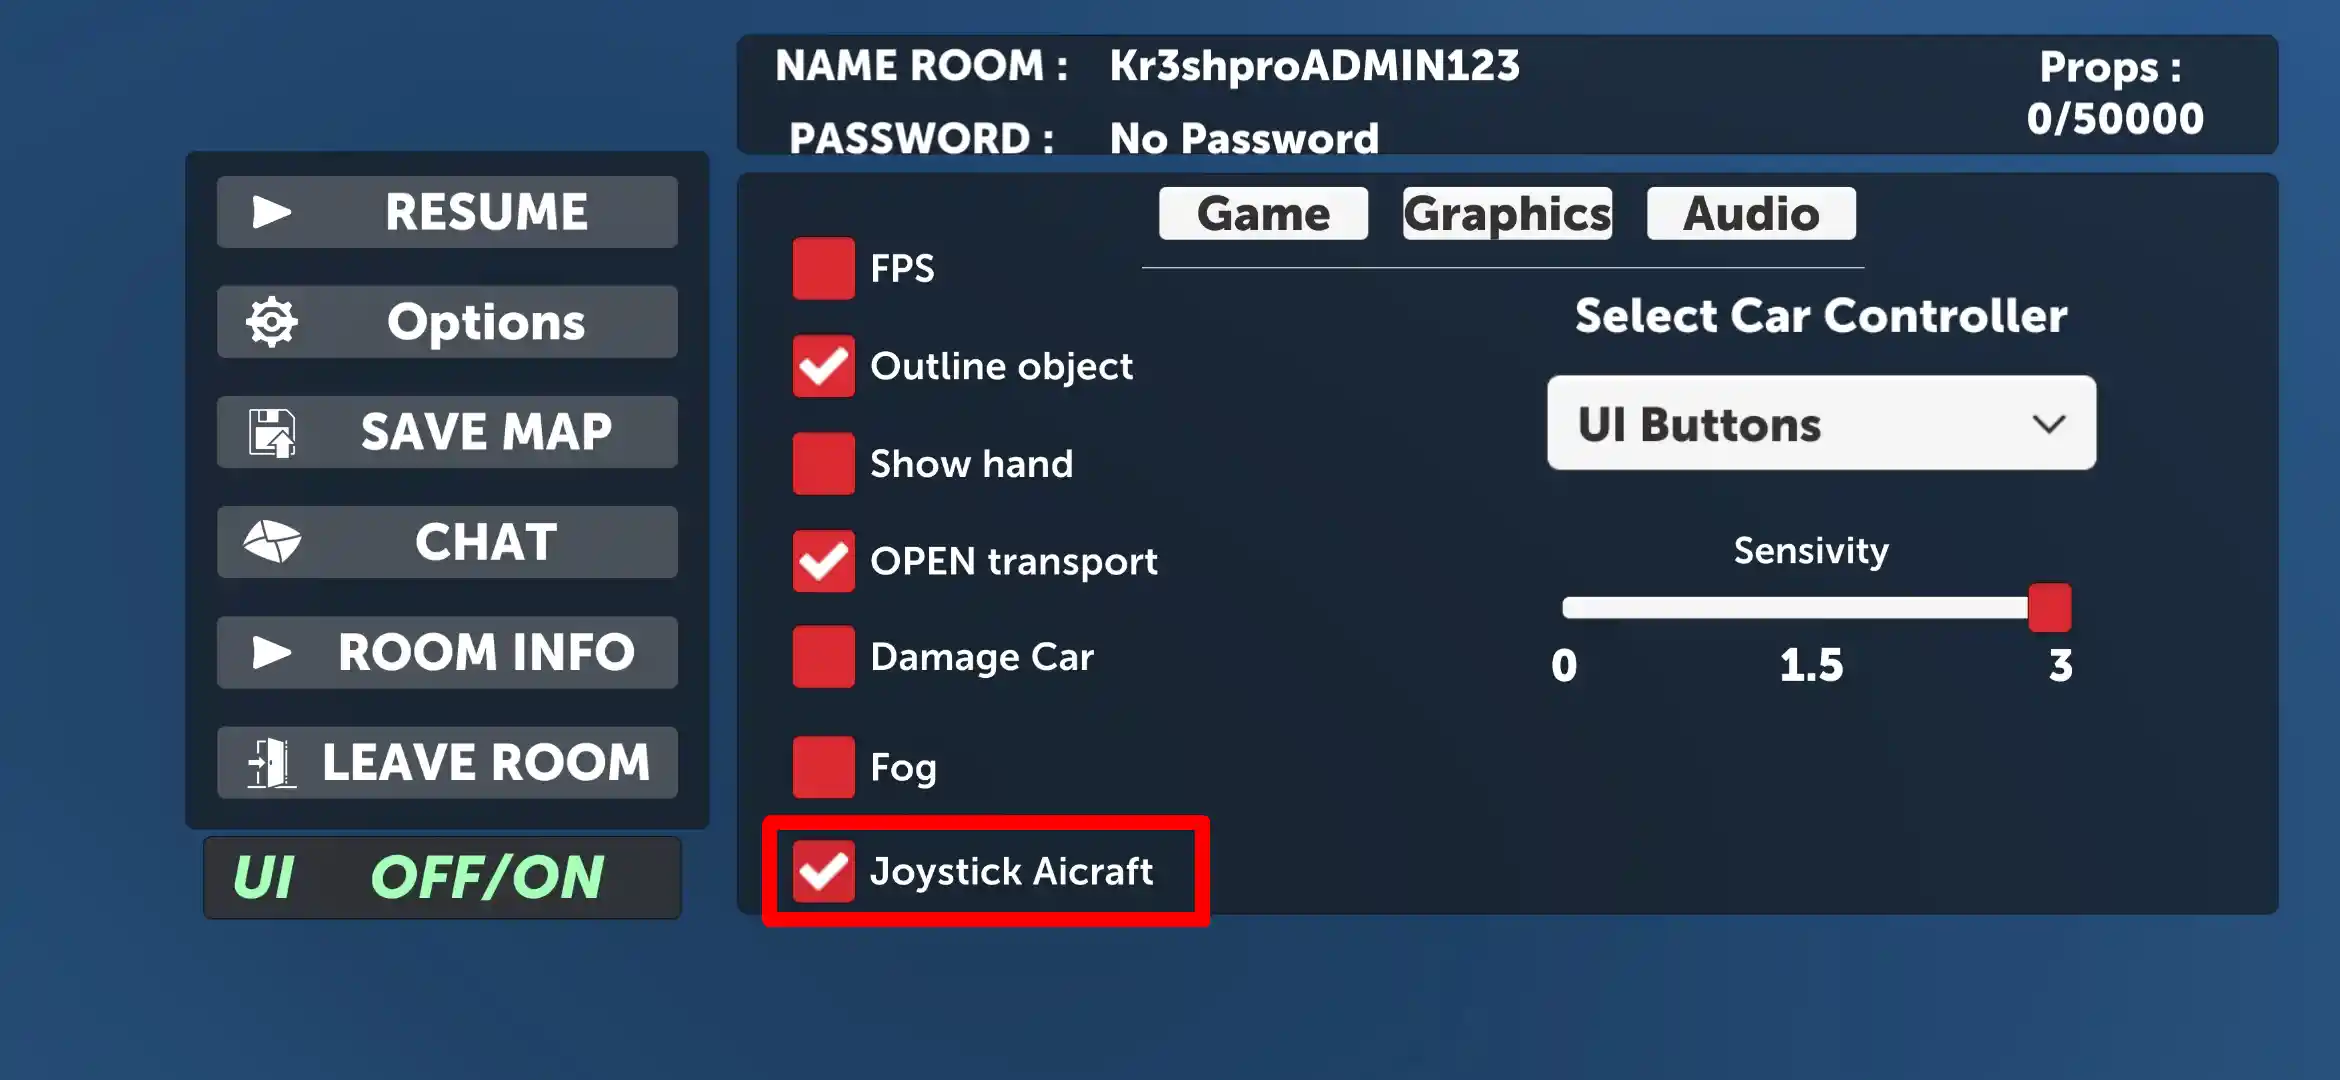 howto_control_aircraft_joystick option.jpg